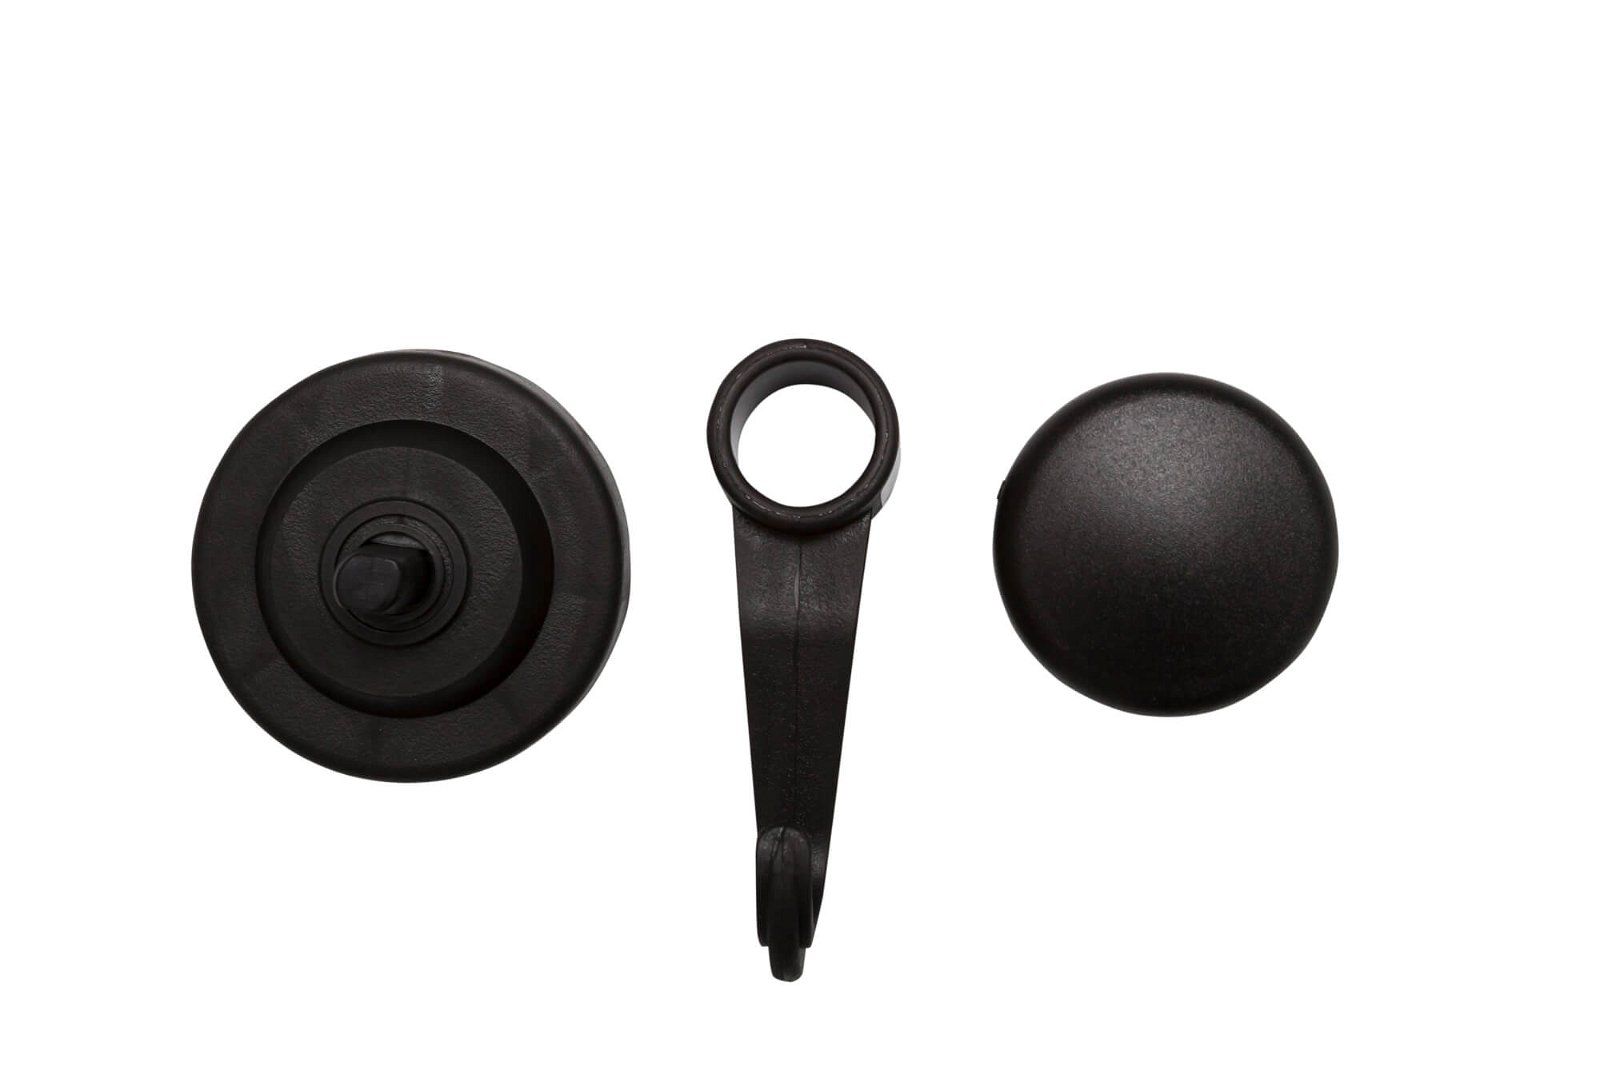 Neodym-Magnet Karusell-Haken Ø 53 mm, 10 kg Haftkraft, schwarz